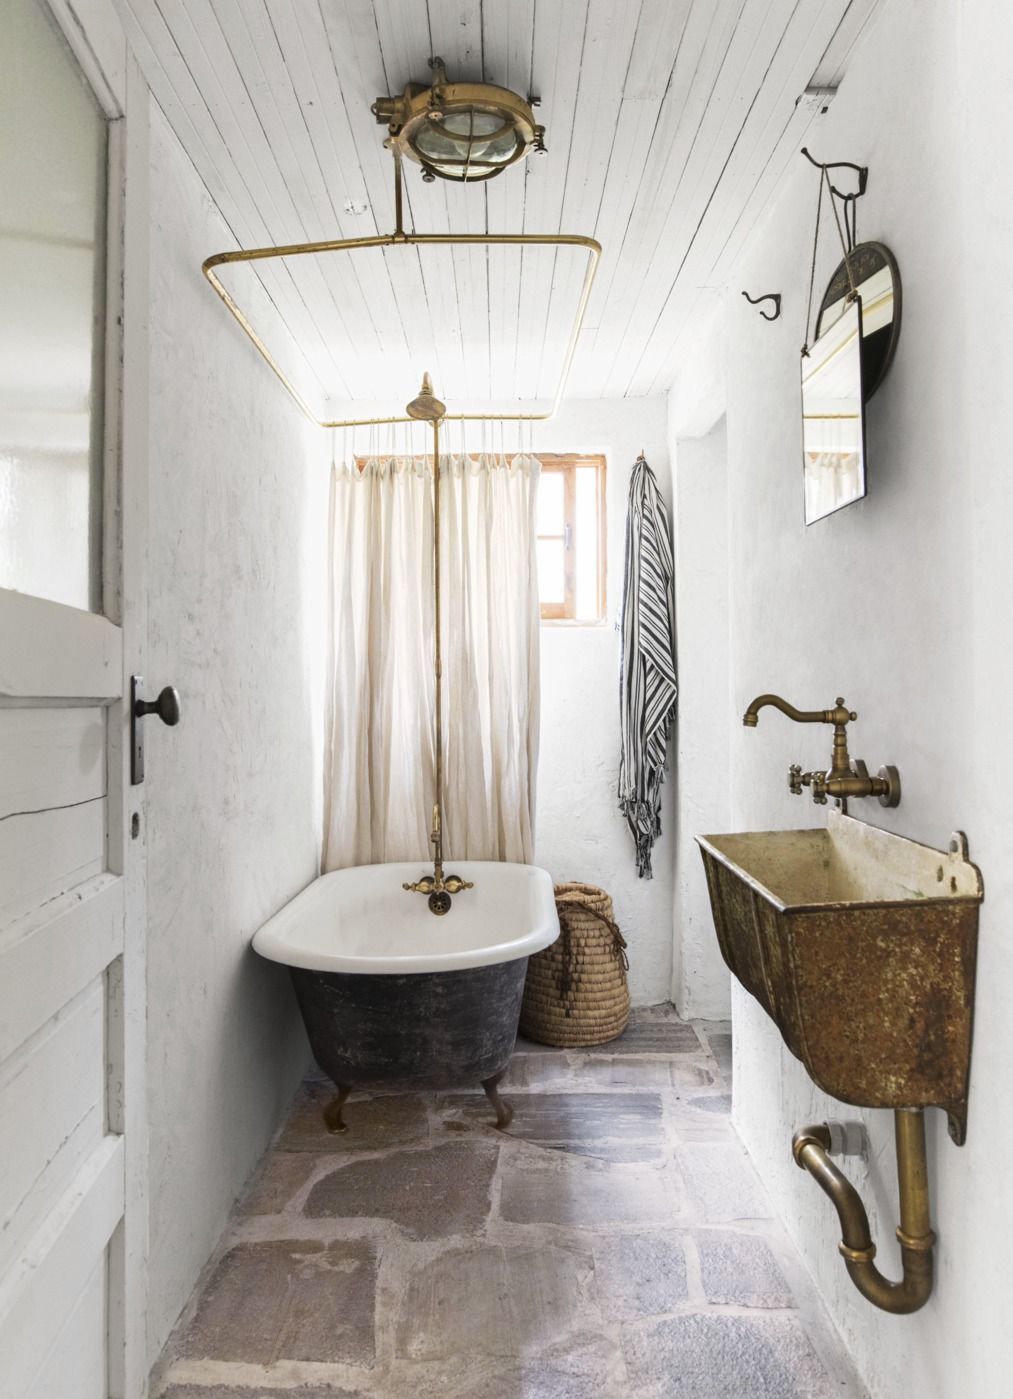 18 Best Bathroom Decorating Ideas   Decor & Design Inspiration ...